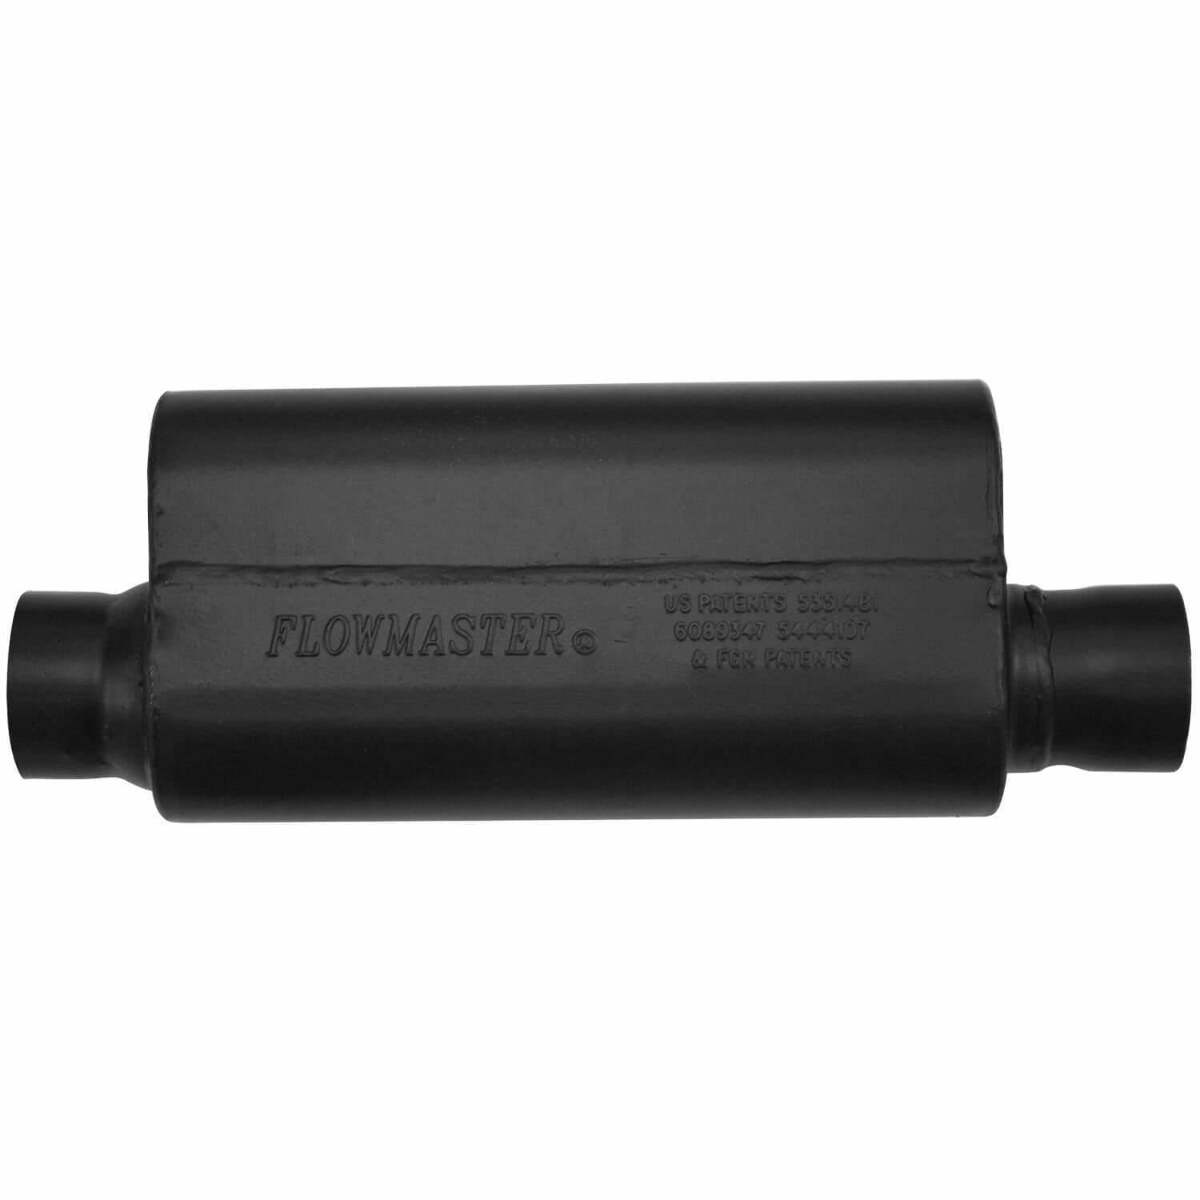 Flowmaster Resonator 15150S